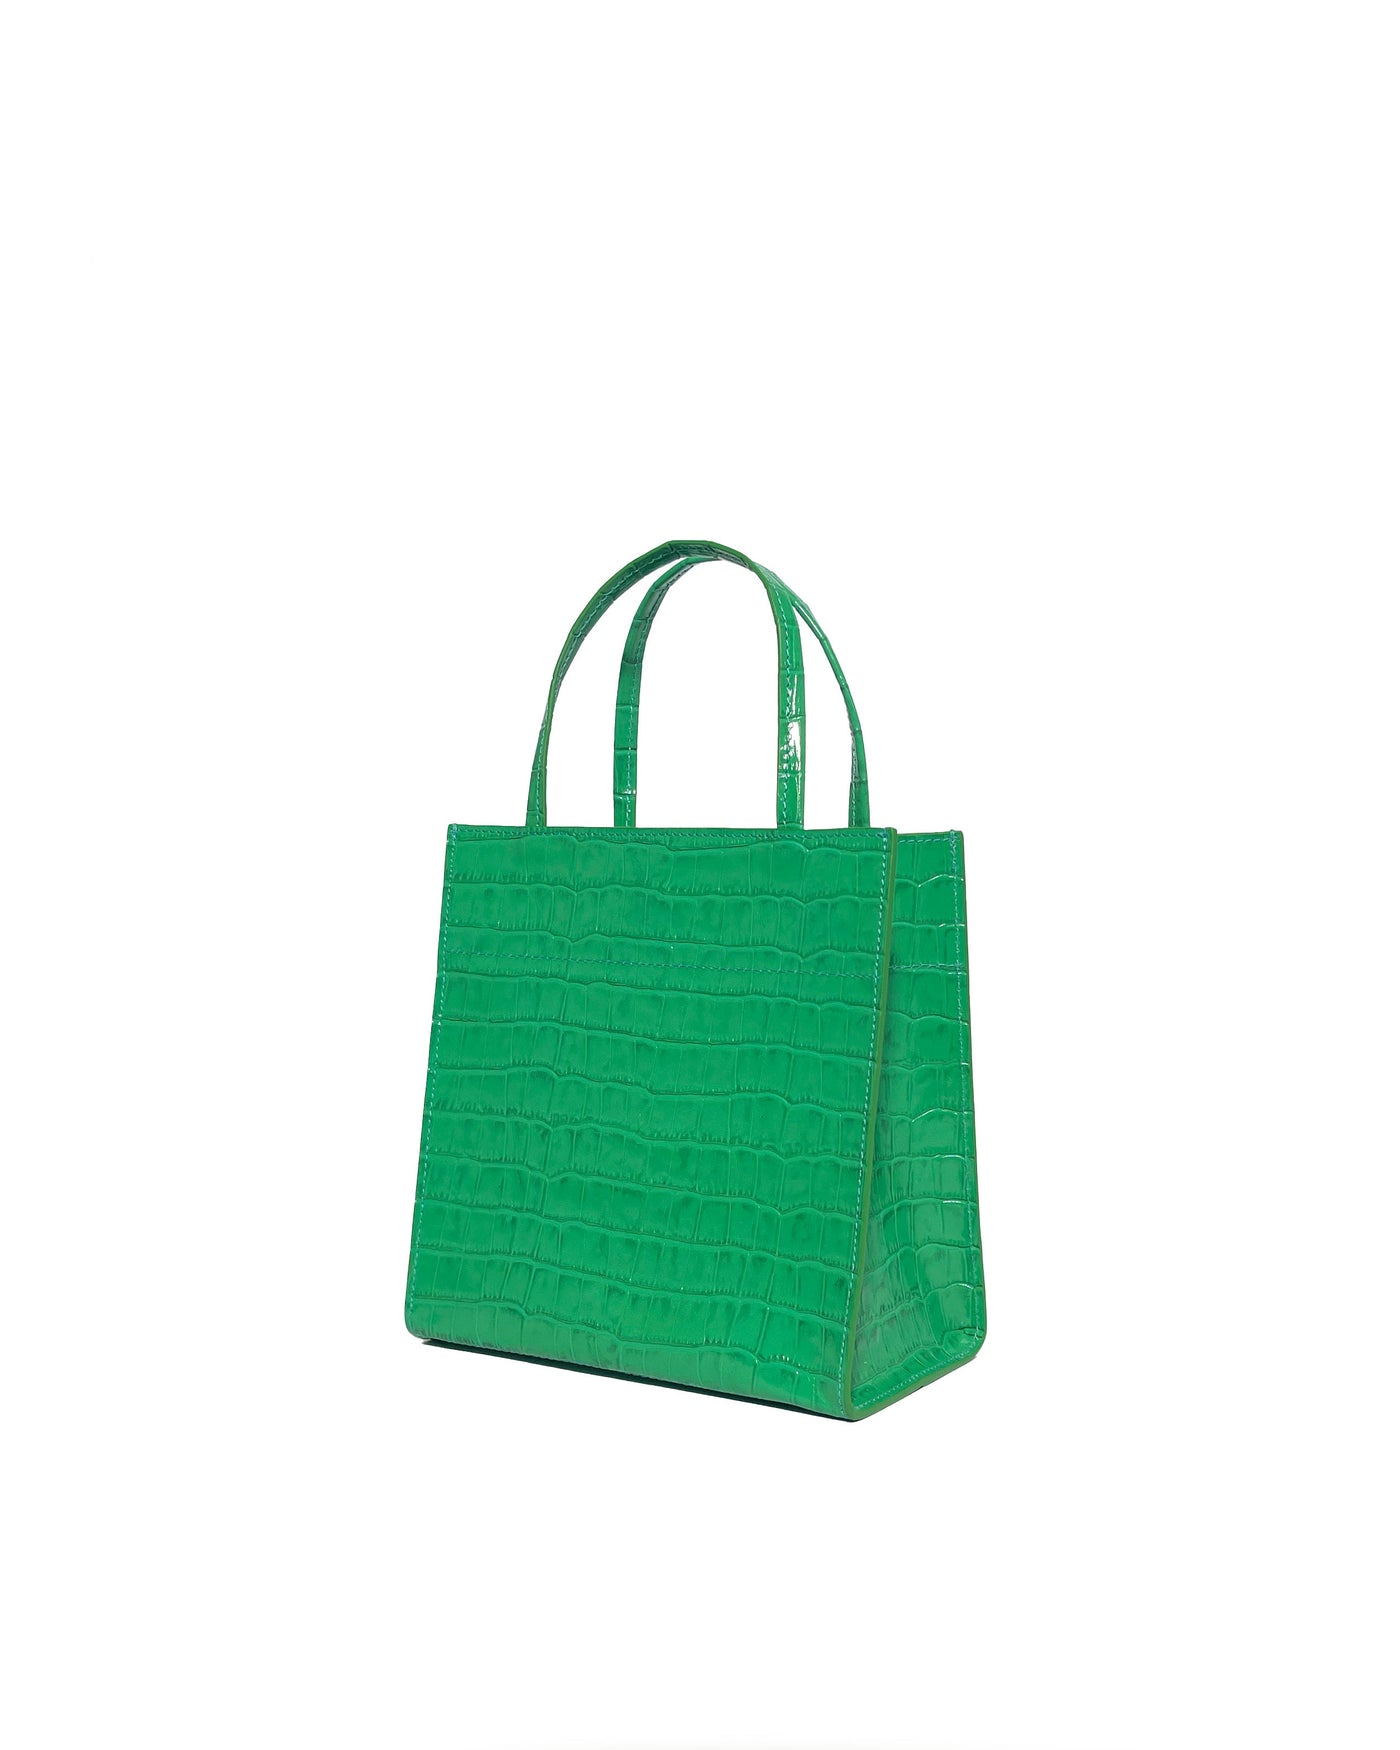 Toni Small Green Tote Bag